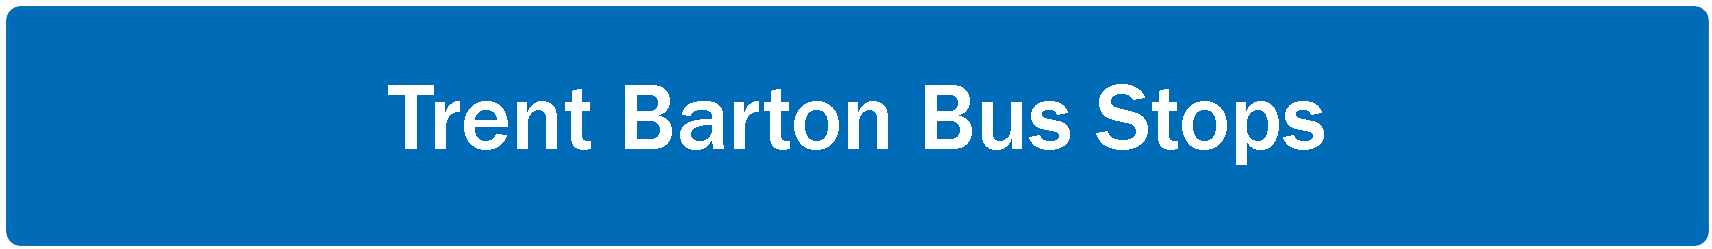 Trent Barton Bus Stops